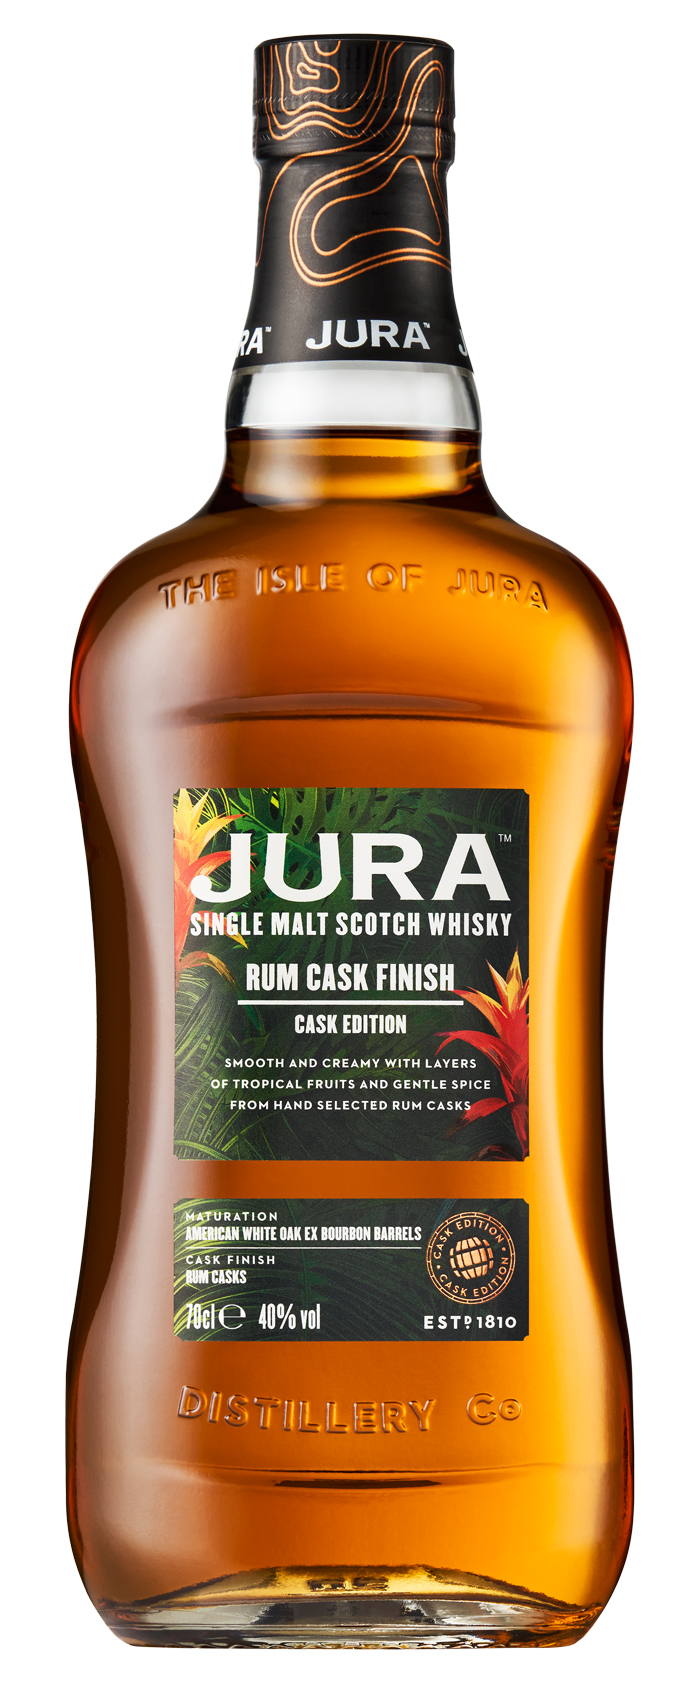  Jura Single Malt Scotch Whisky - Rum Cask Finish 0,7l 40%vol.